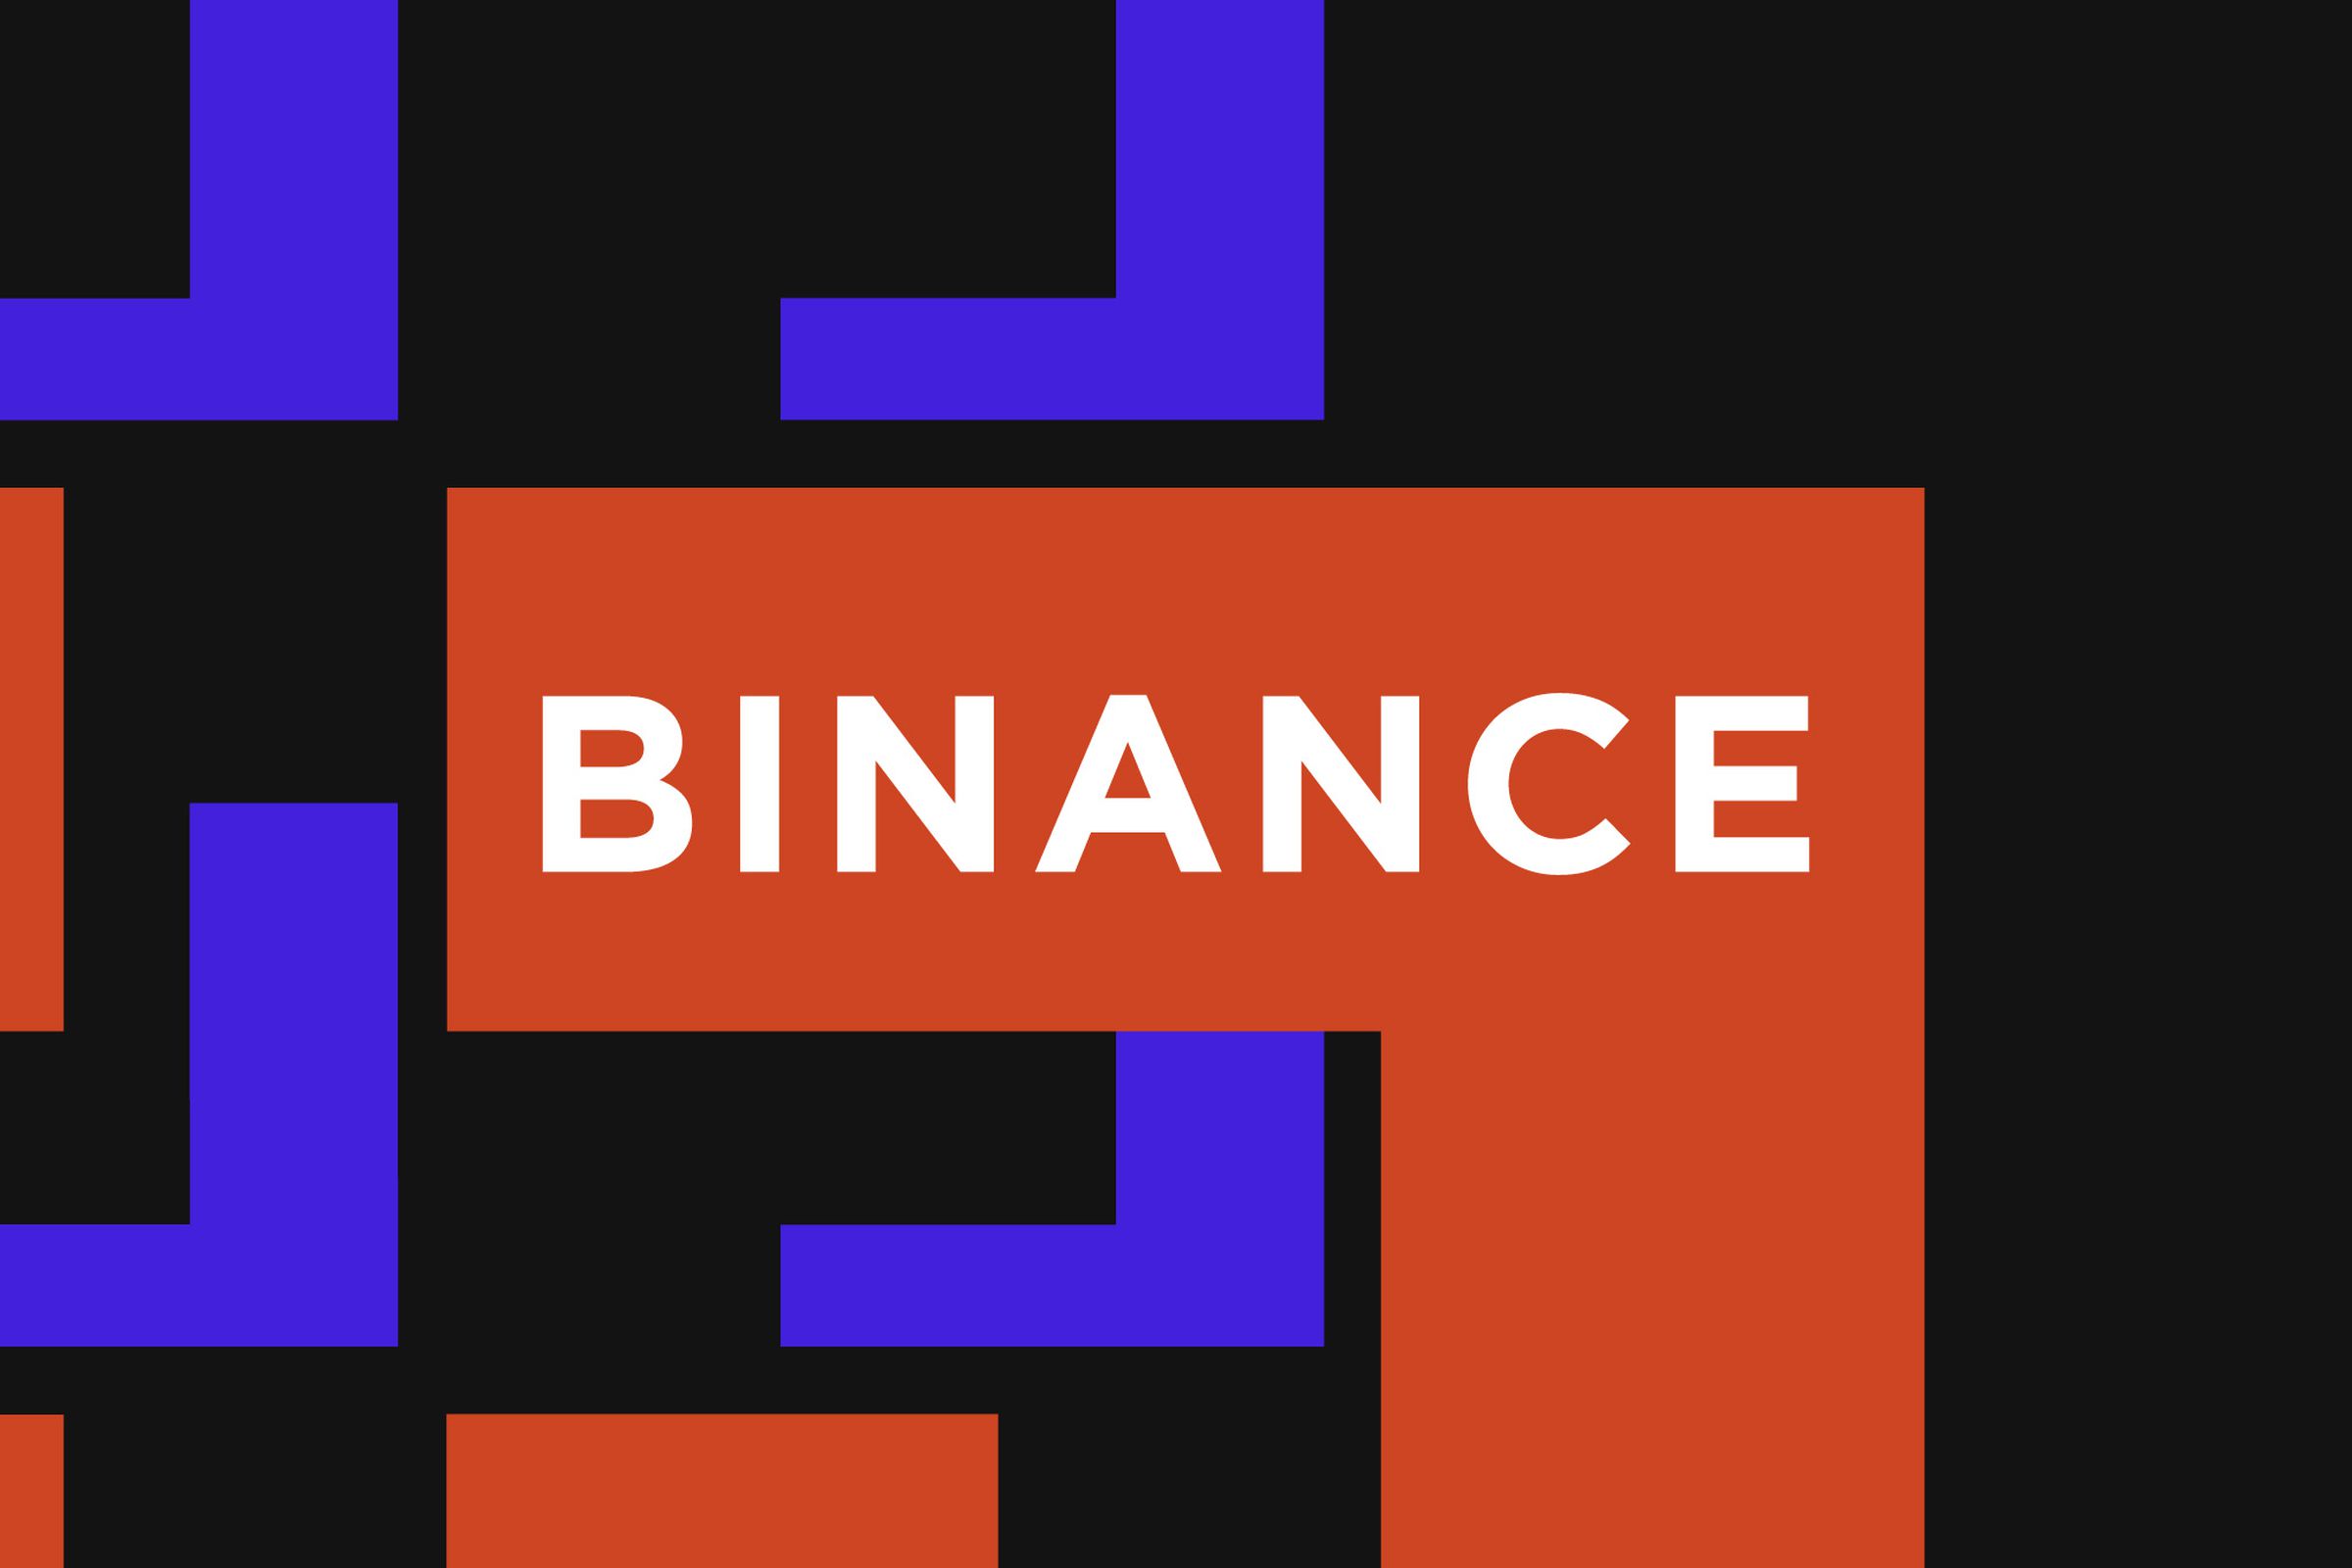 An image showing Binance’s logo